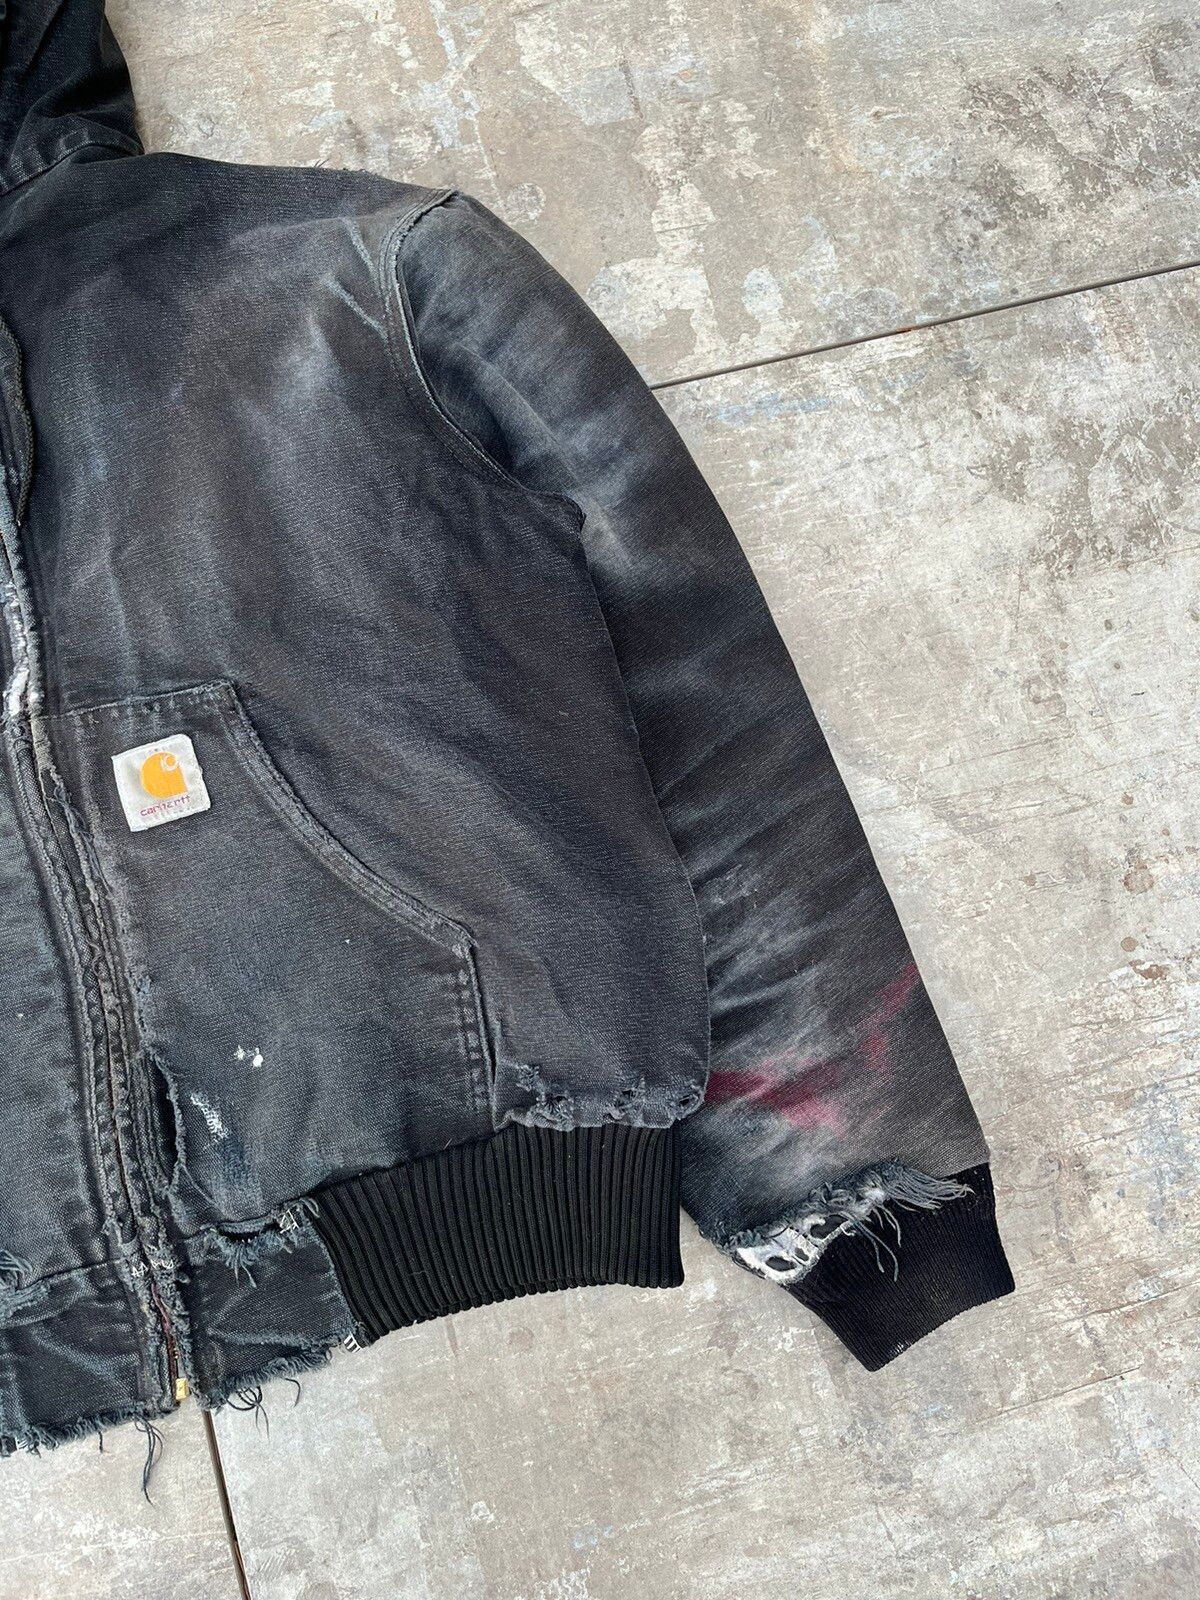 Vintage Vintage 90s Faded Black Carhartt Work Jacket Size US L / EU 52-54 / 3 - 4 Thumbnail